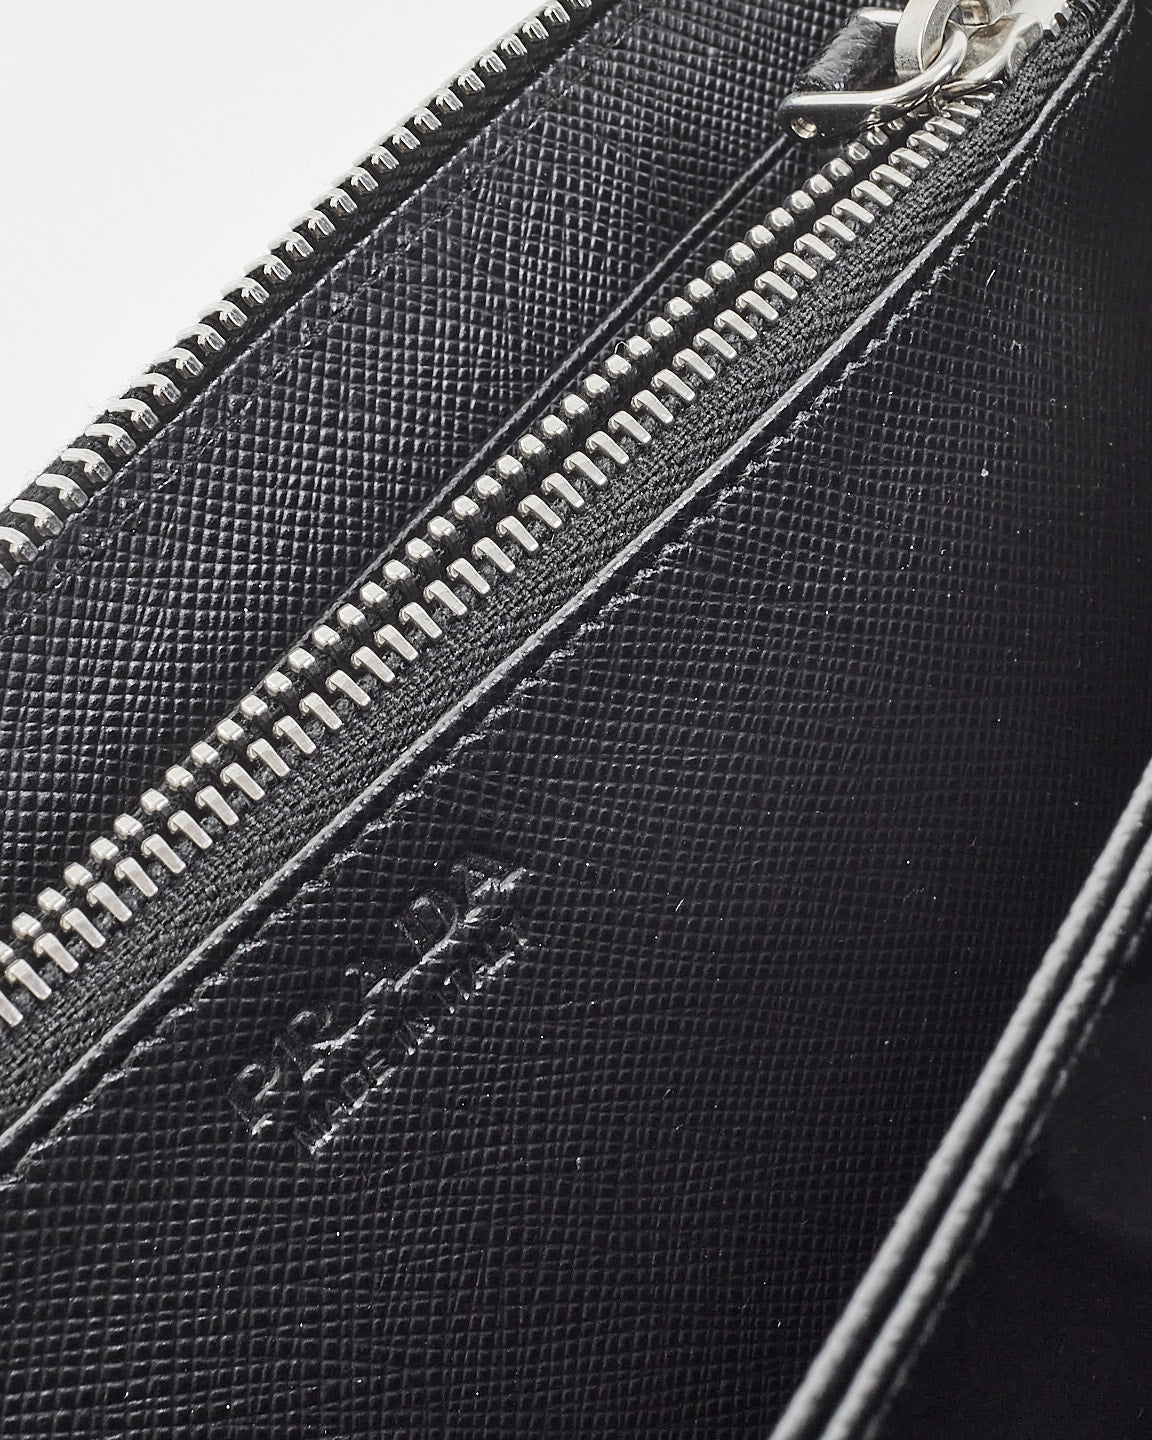 Prada Black & Blue Saffiano Leather Logo Patch Long Zip Wallet